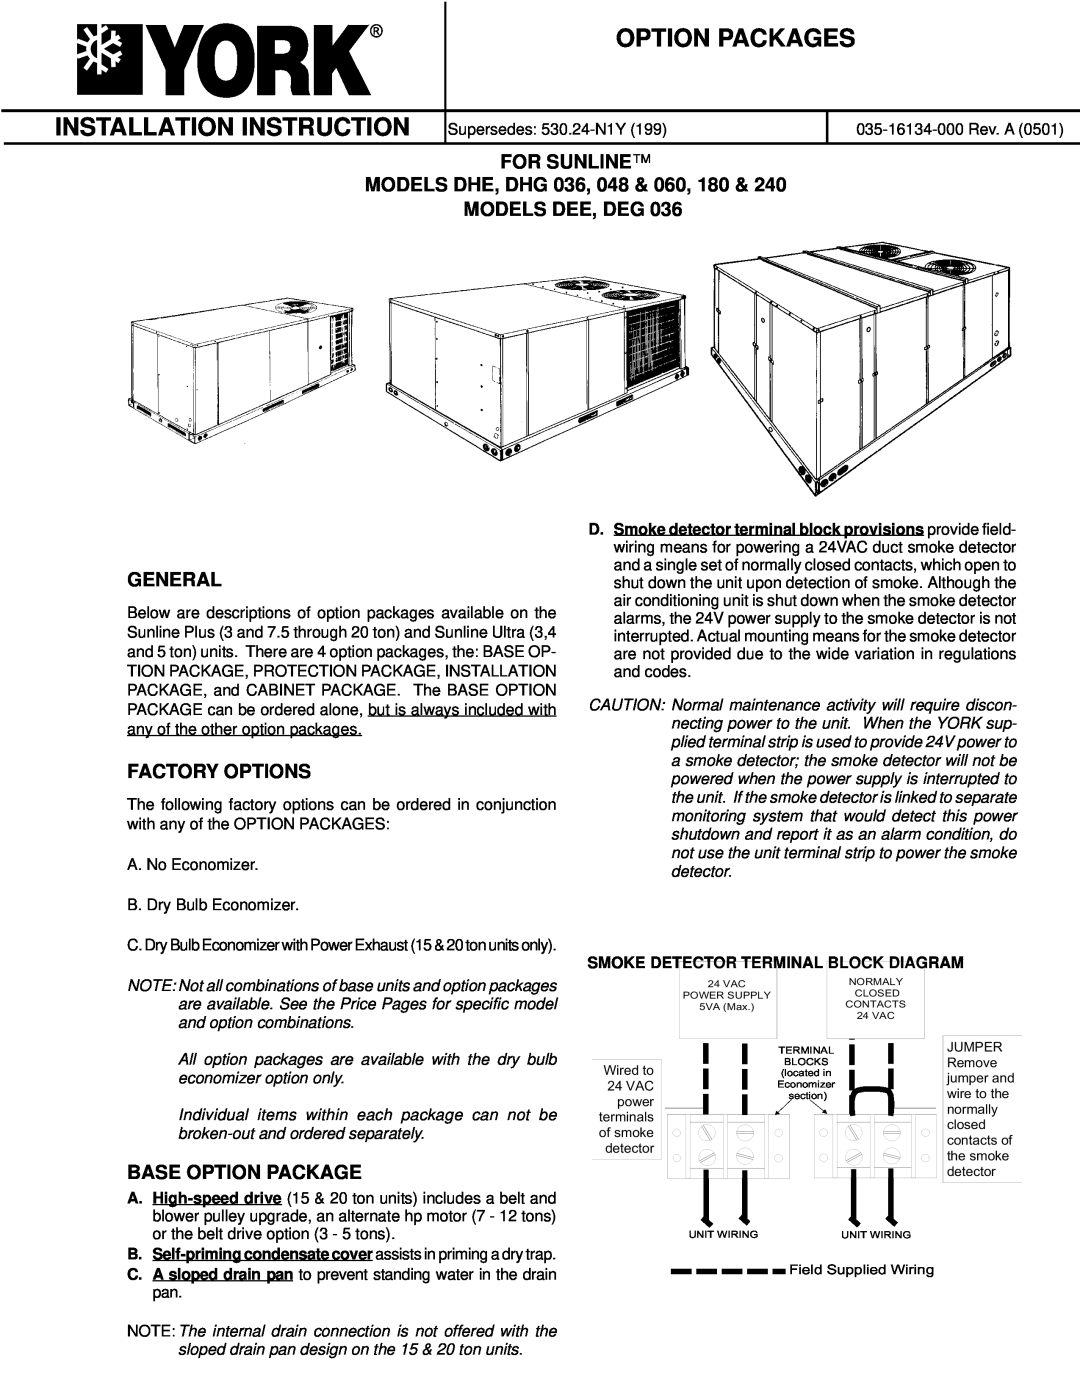 York DHG 060 installation instructions FOR SUNLINE MODELS DHE, DHG 036, 048, Models Dee, Deg, General, Factory Options 